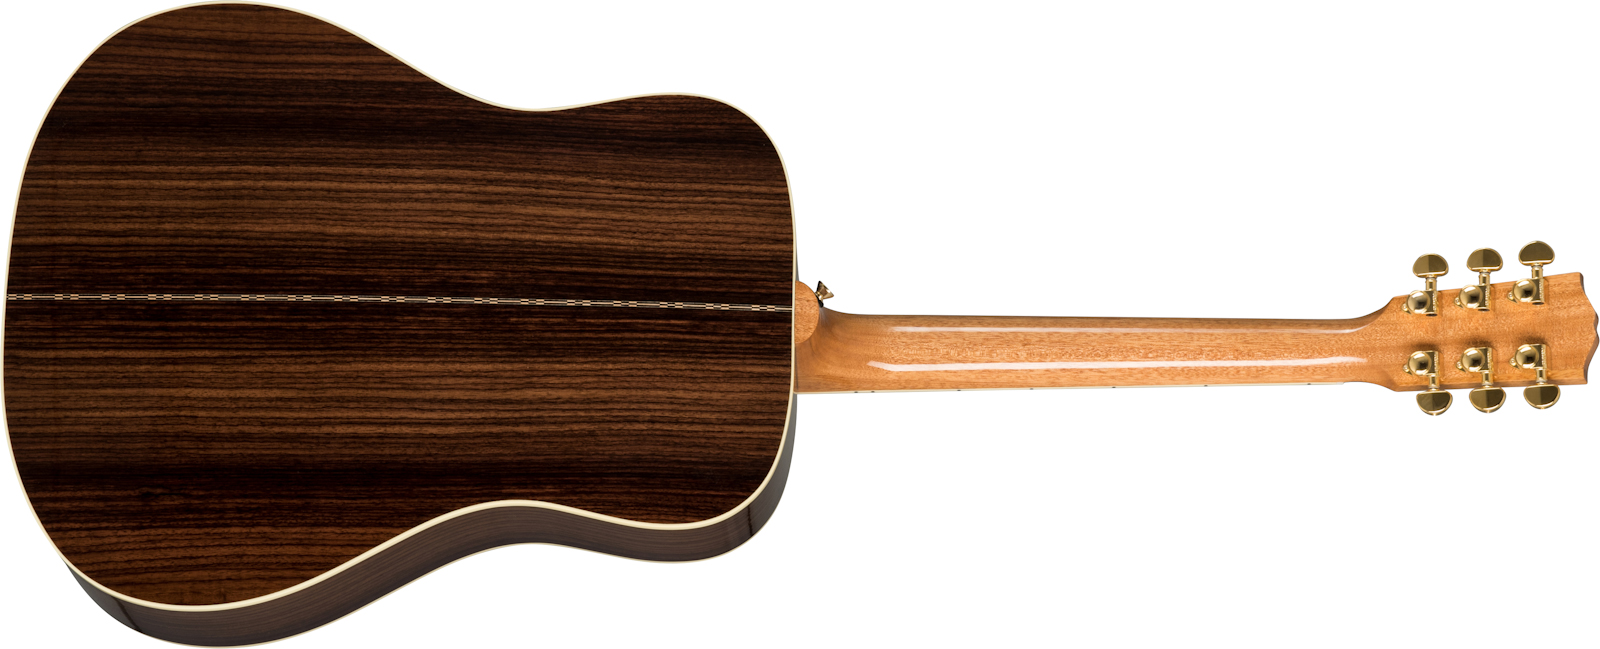 Gibson Songwriter Standard Rosewood 2019 Epicea Palissandre Rw - Antique Natural - Elektroakustische Gitarre - Variation 1